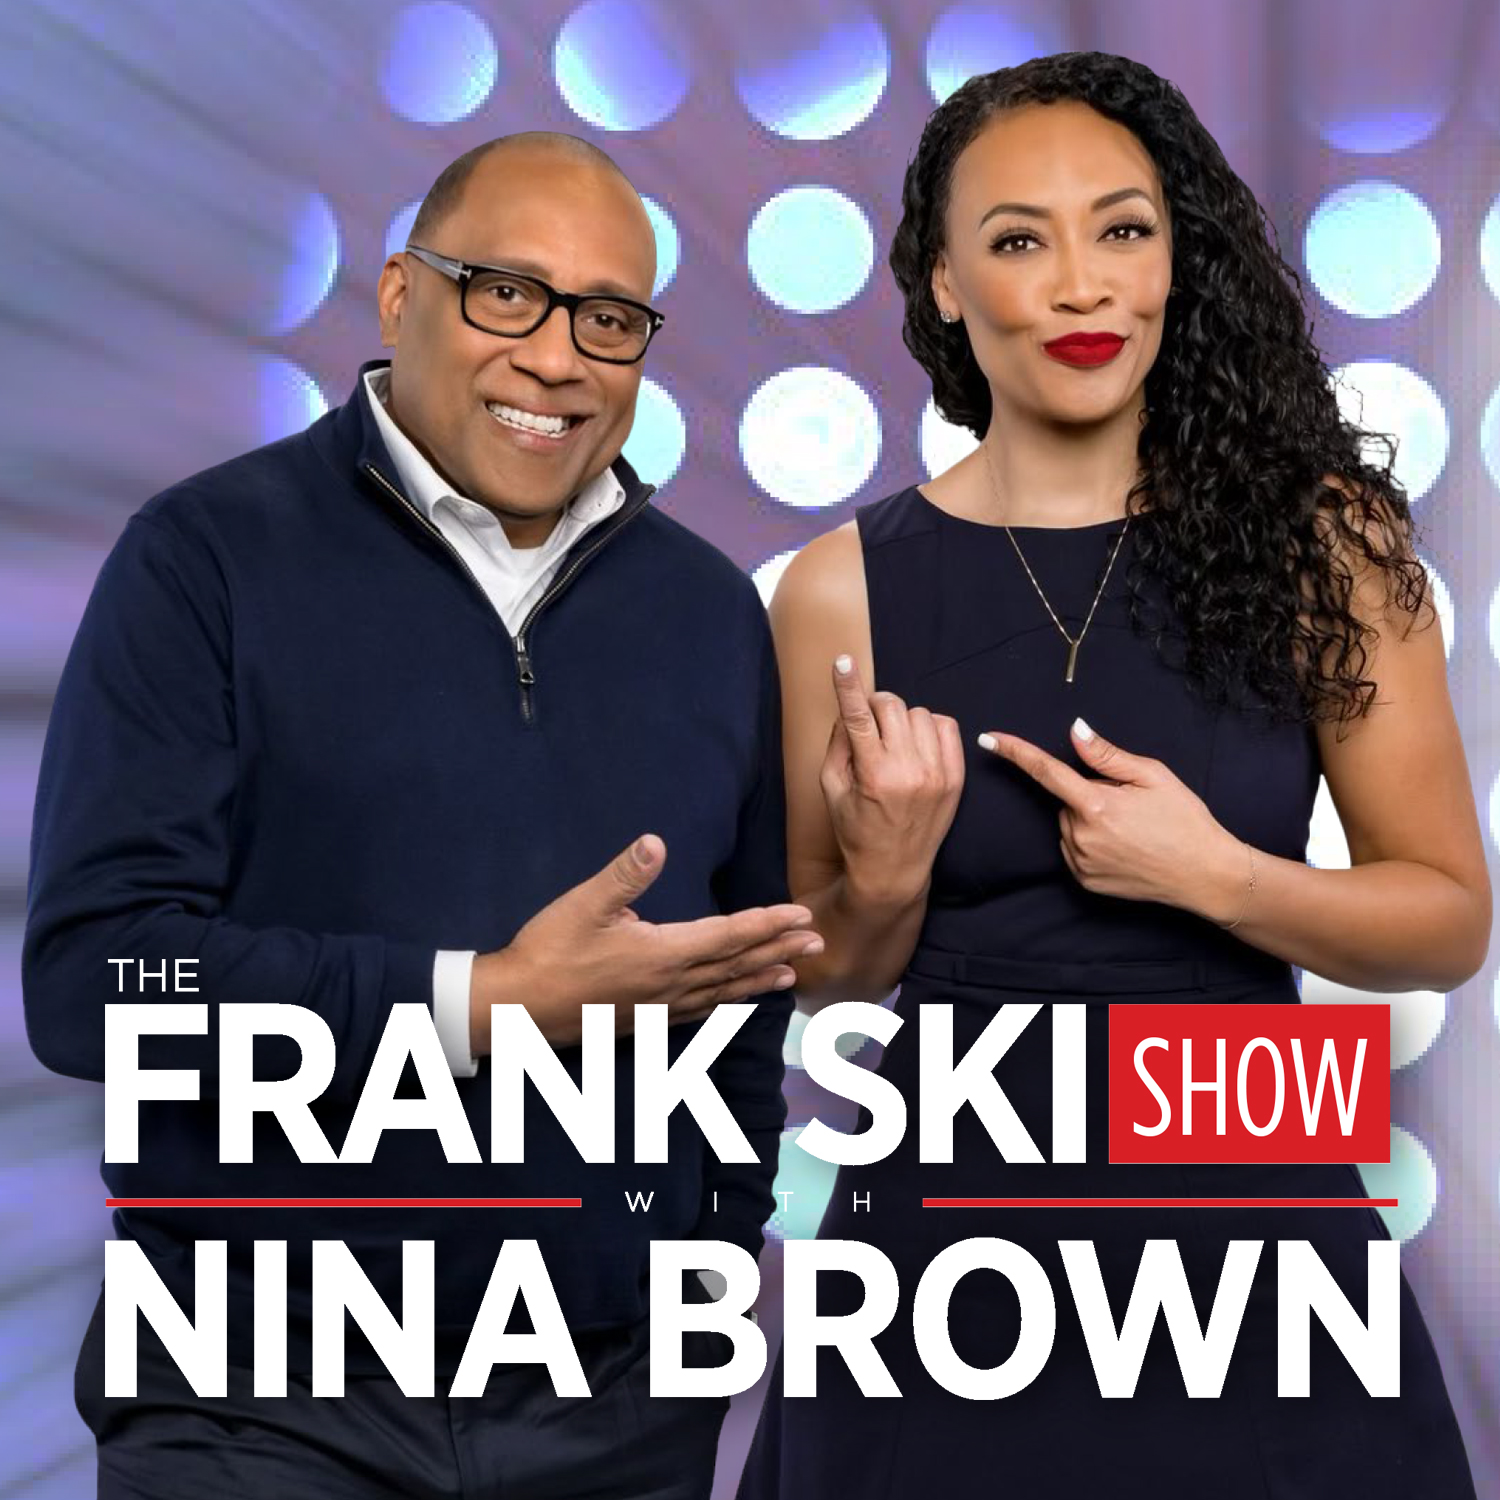 The Frank Ski Show with Nina Brown